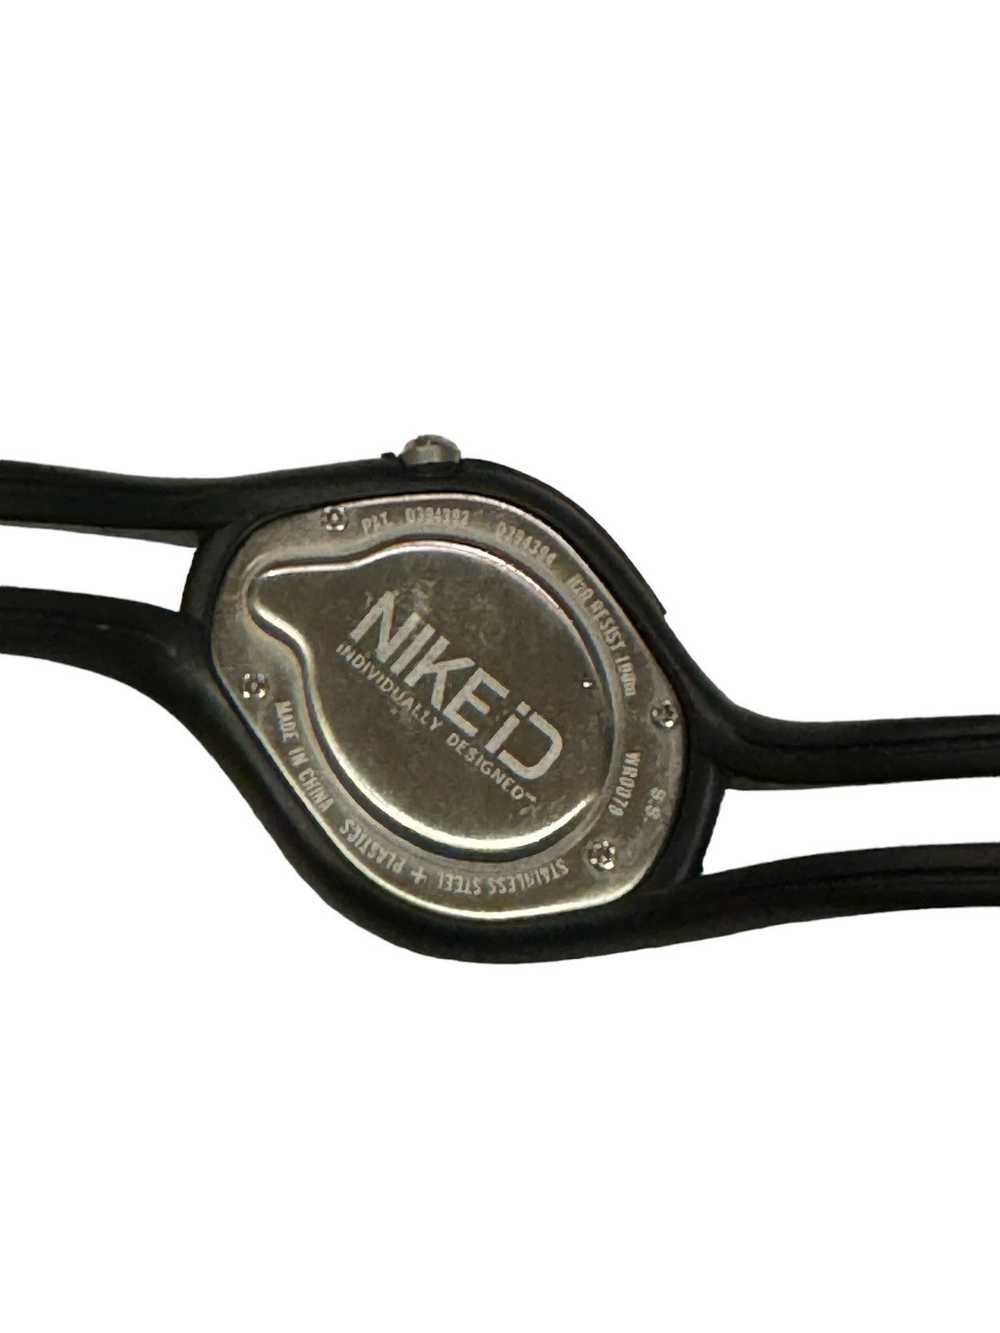 Nike × Streetwear Vintage Nike Triax Sports Watch - image 4